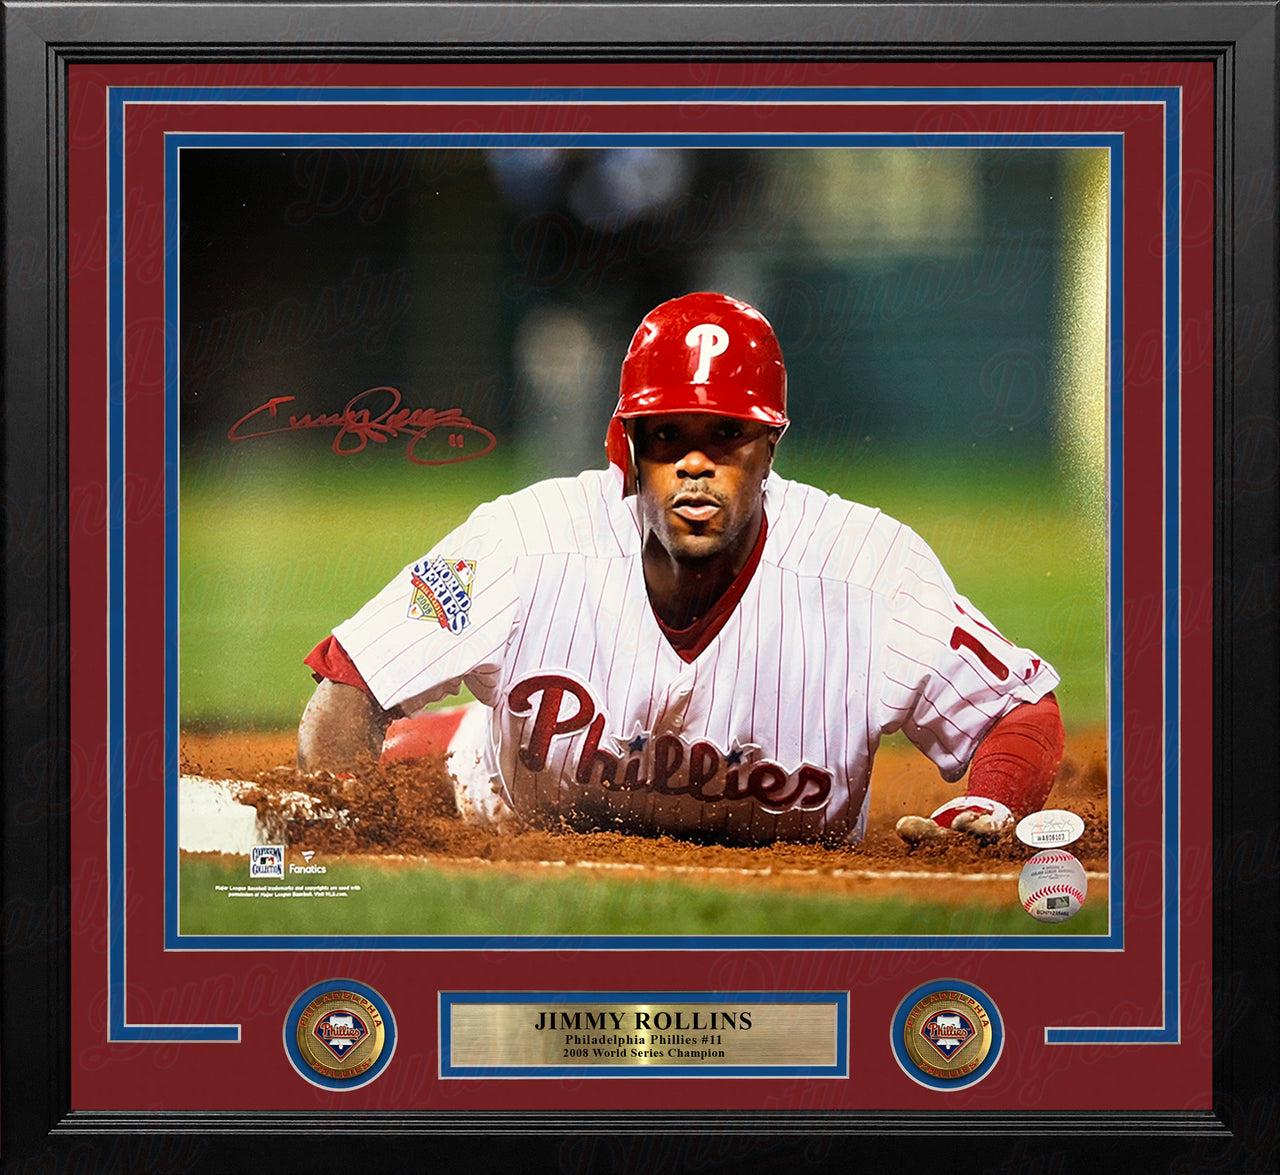 Jimmy Rollins 2008 World Series Slide Autographed Philadelphia Phillies 11x14 Framed Baseball Photo - Dynasty Sports & Framing 